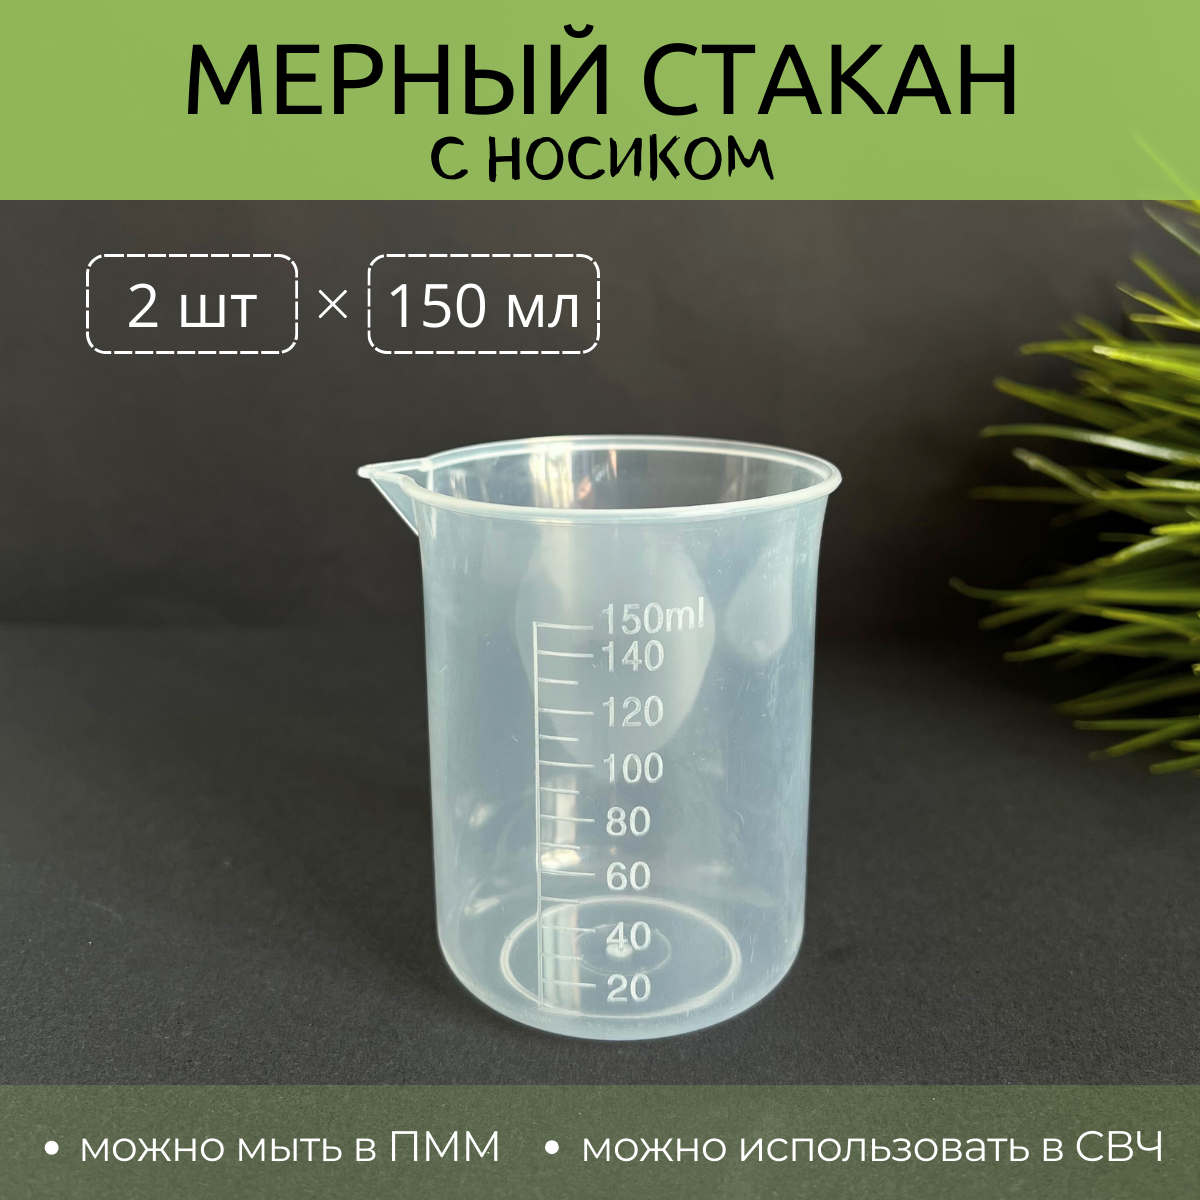 Мерный стакан с носиком, 150 мл, 2 шт.